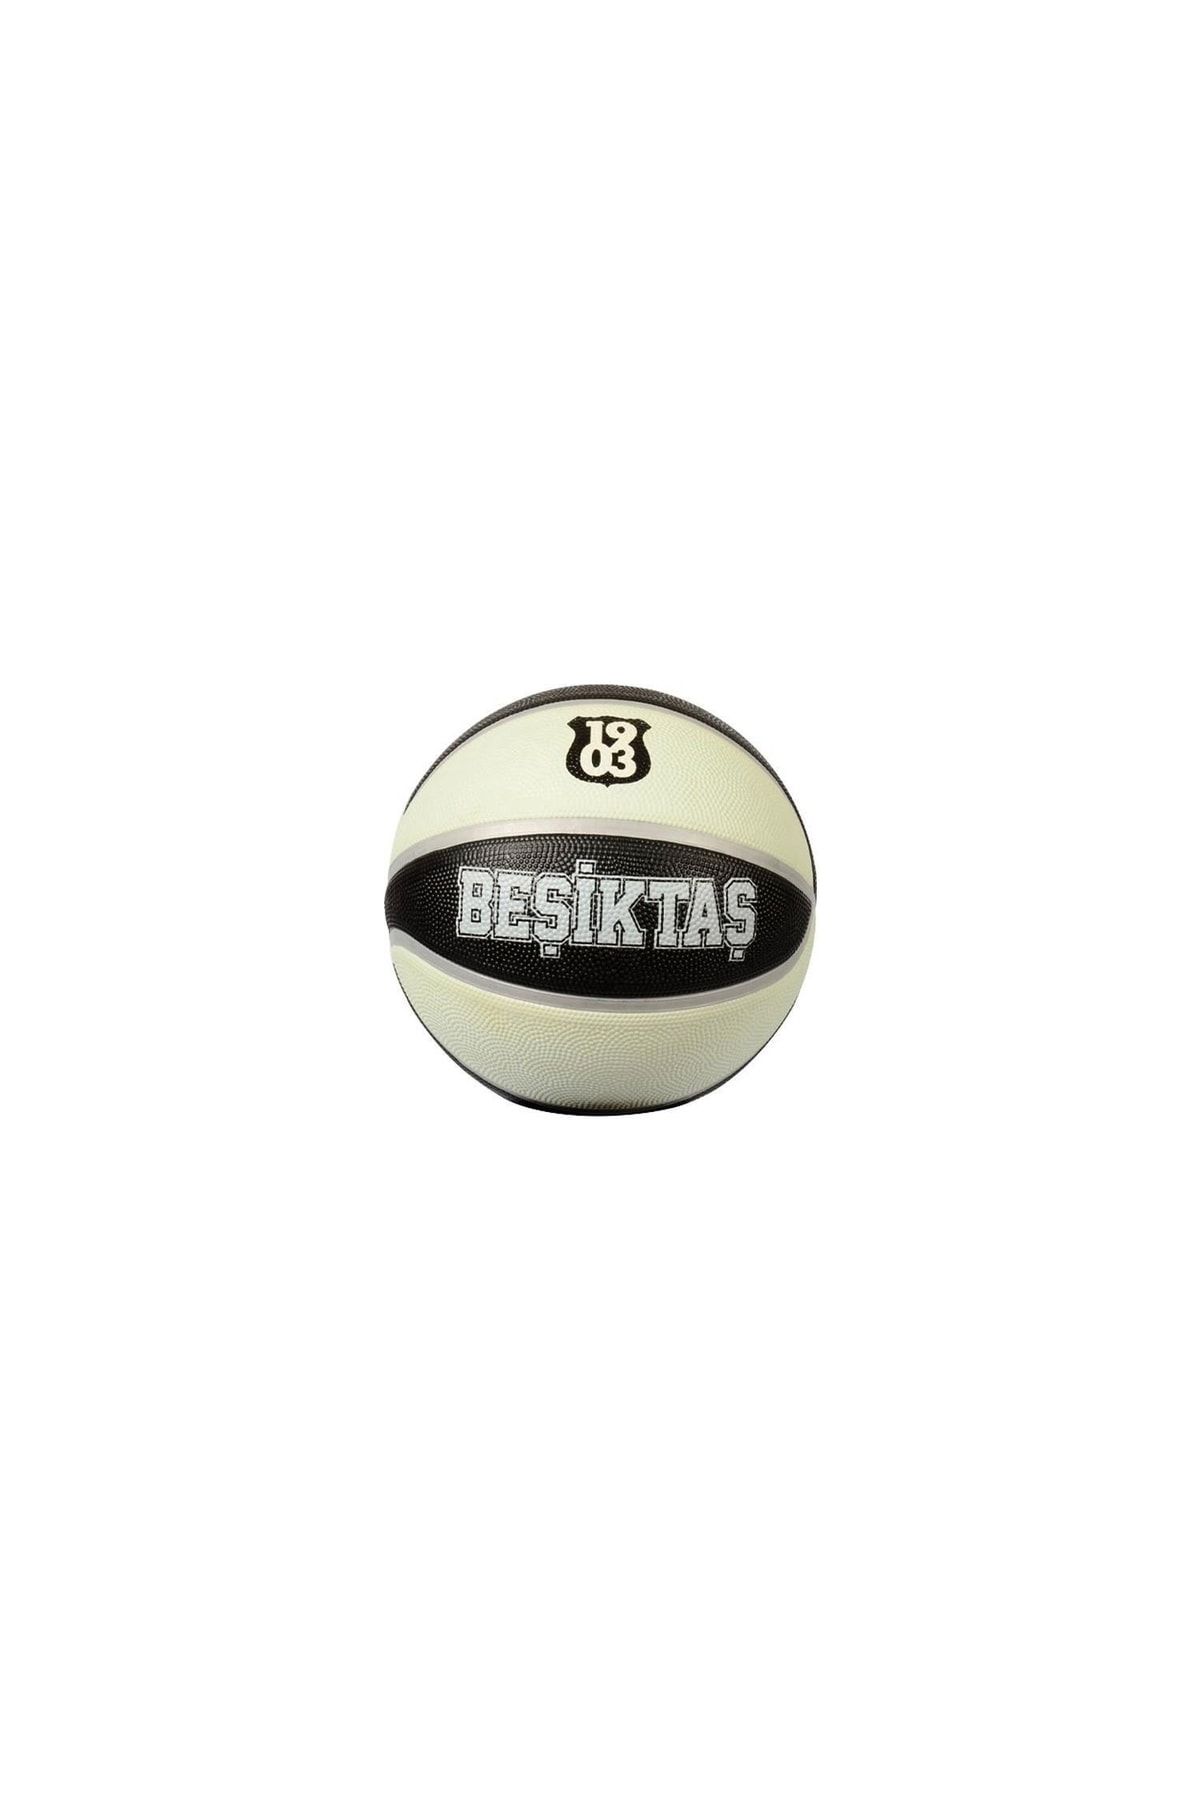 Beşiktaş Basketbol Topu No:7 Siyah Beyaz Basketbol Topu